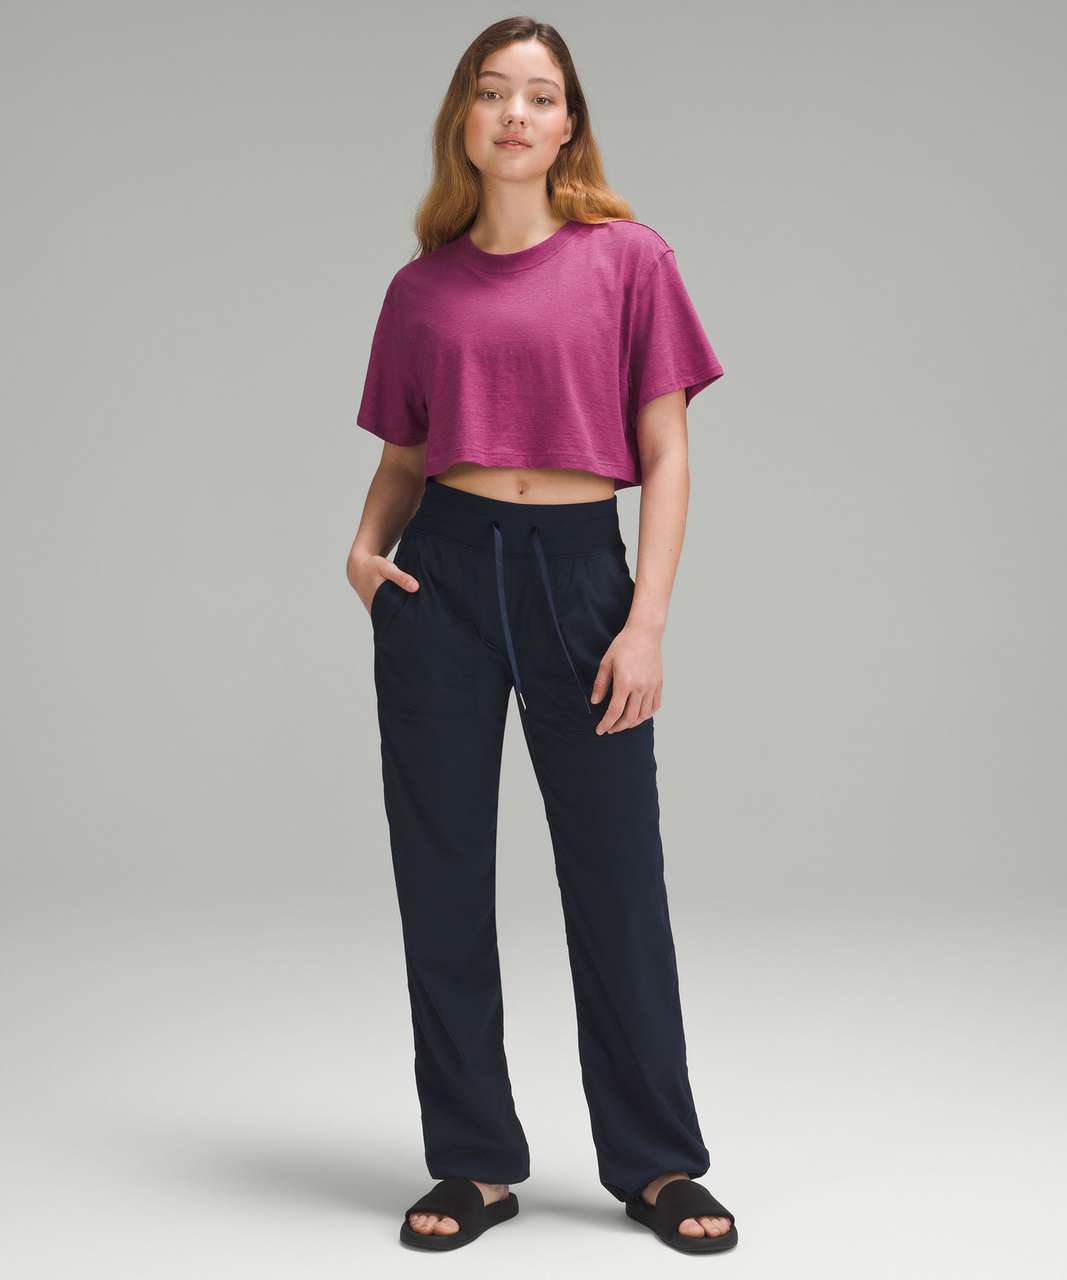 Lululemon All Yours Cropped T-Shirt - Heathered Magenta Purple